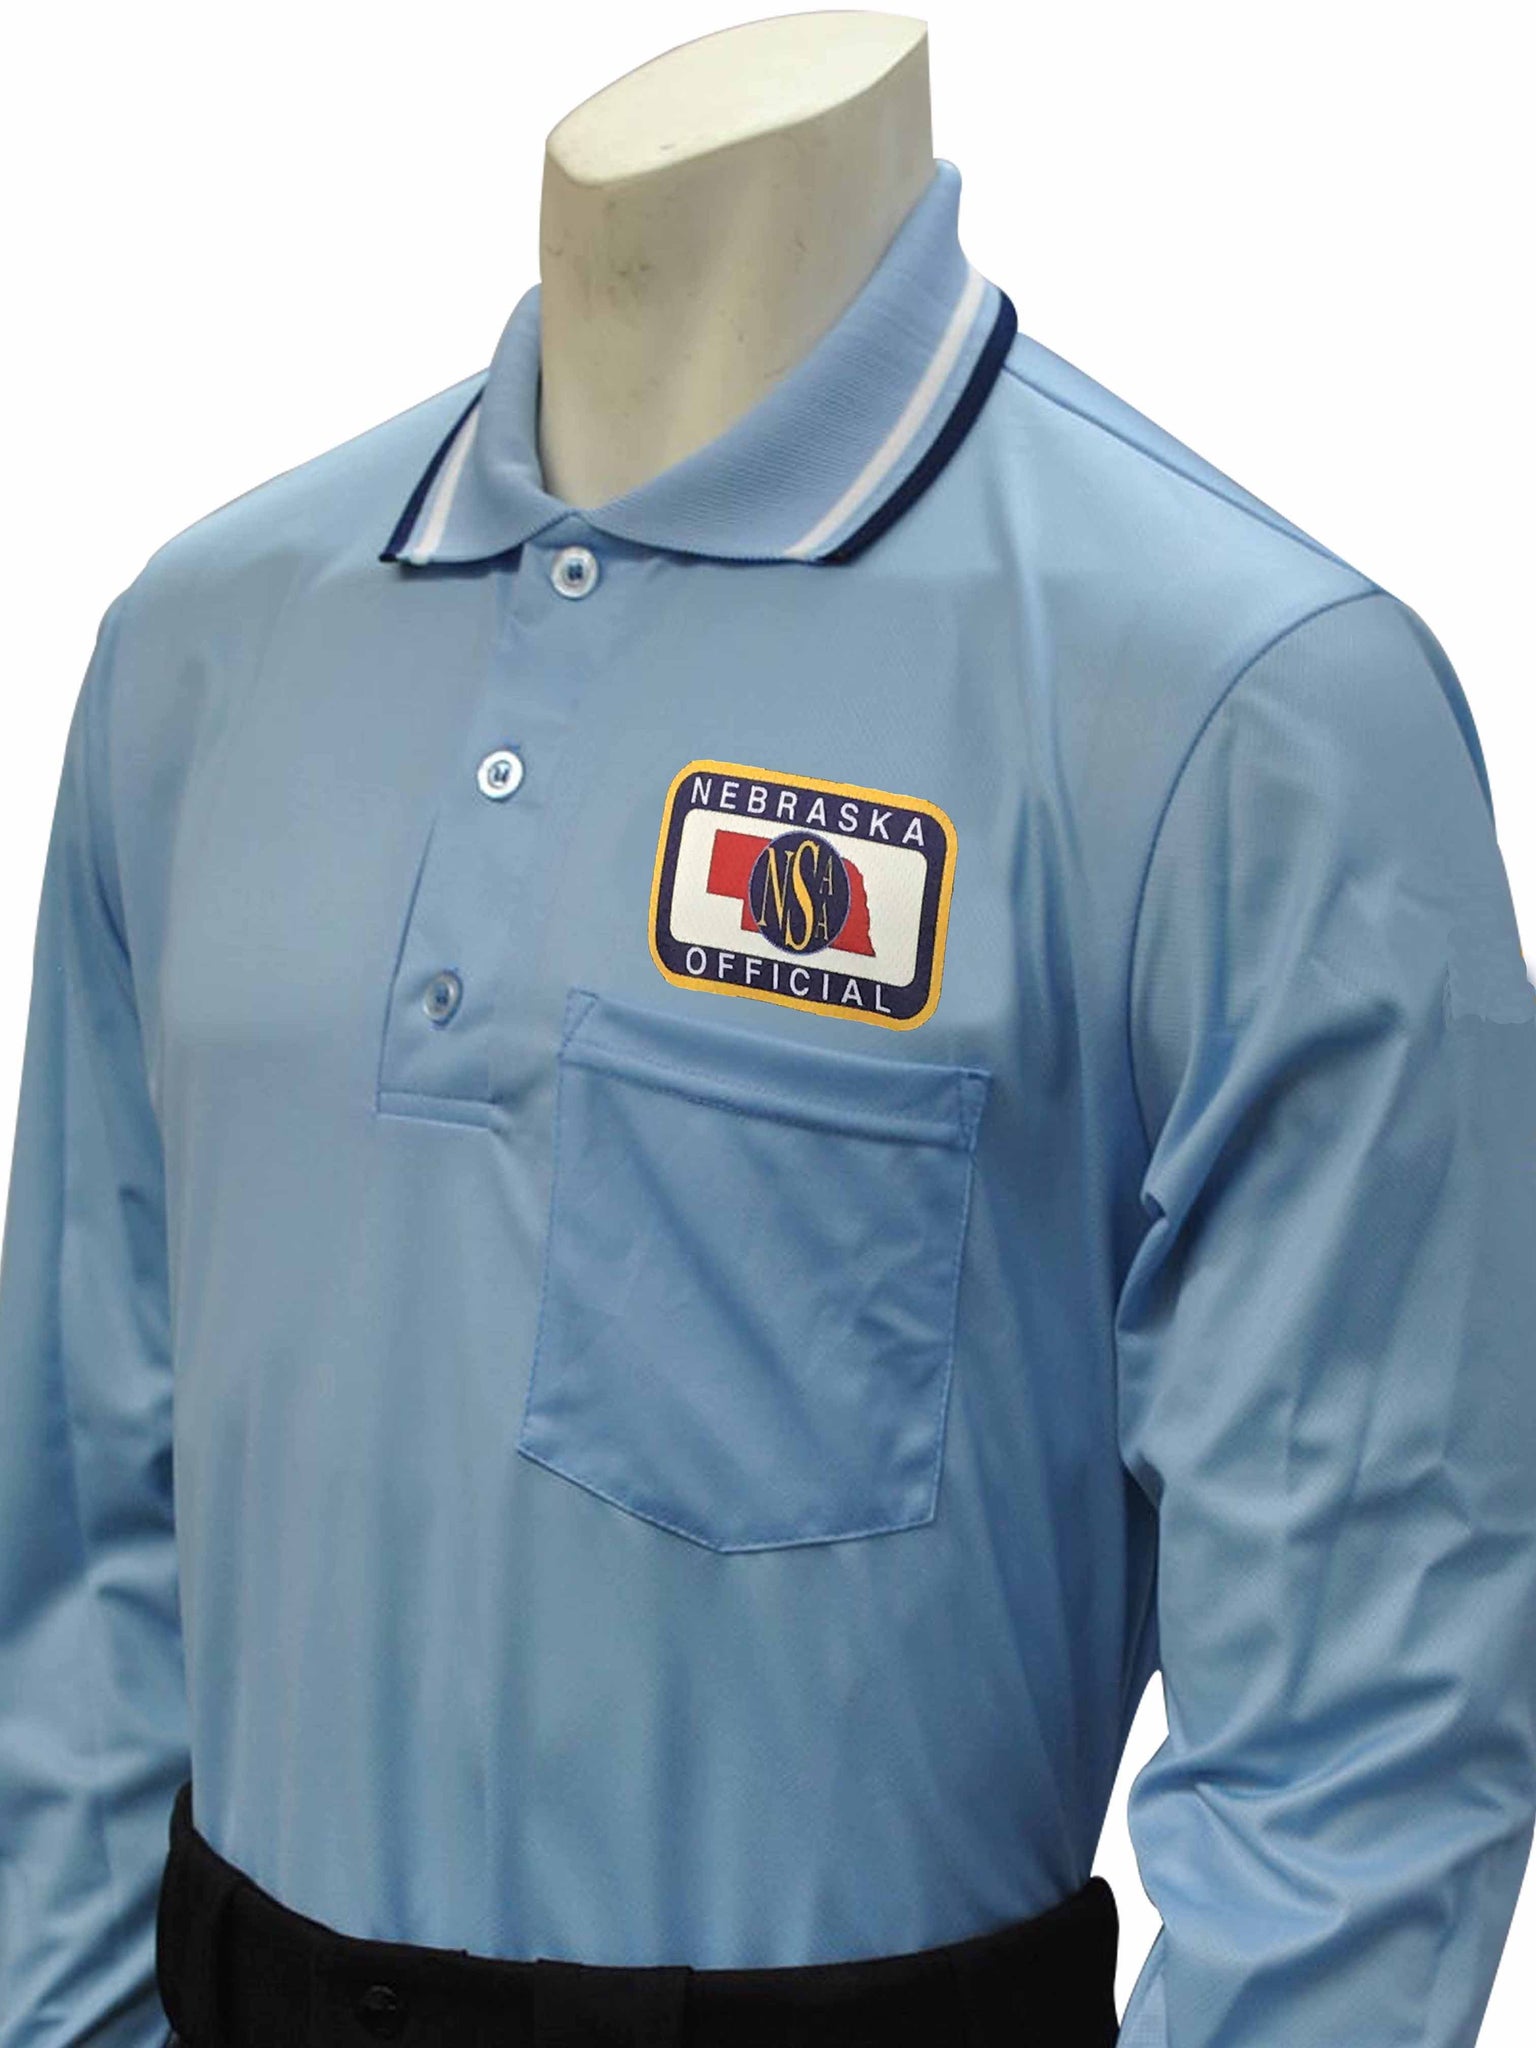 USA301NE - Smitty "Made in USA" - Baseball Men's Long Sleeve Shirt Powder Blue